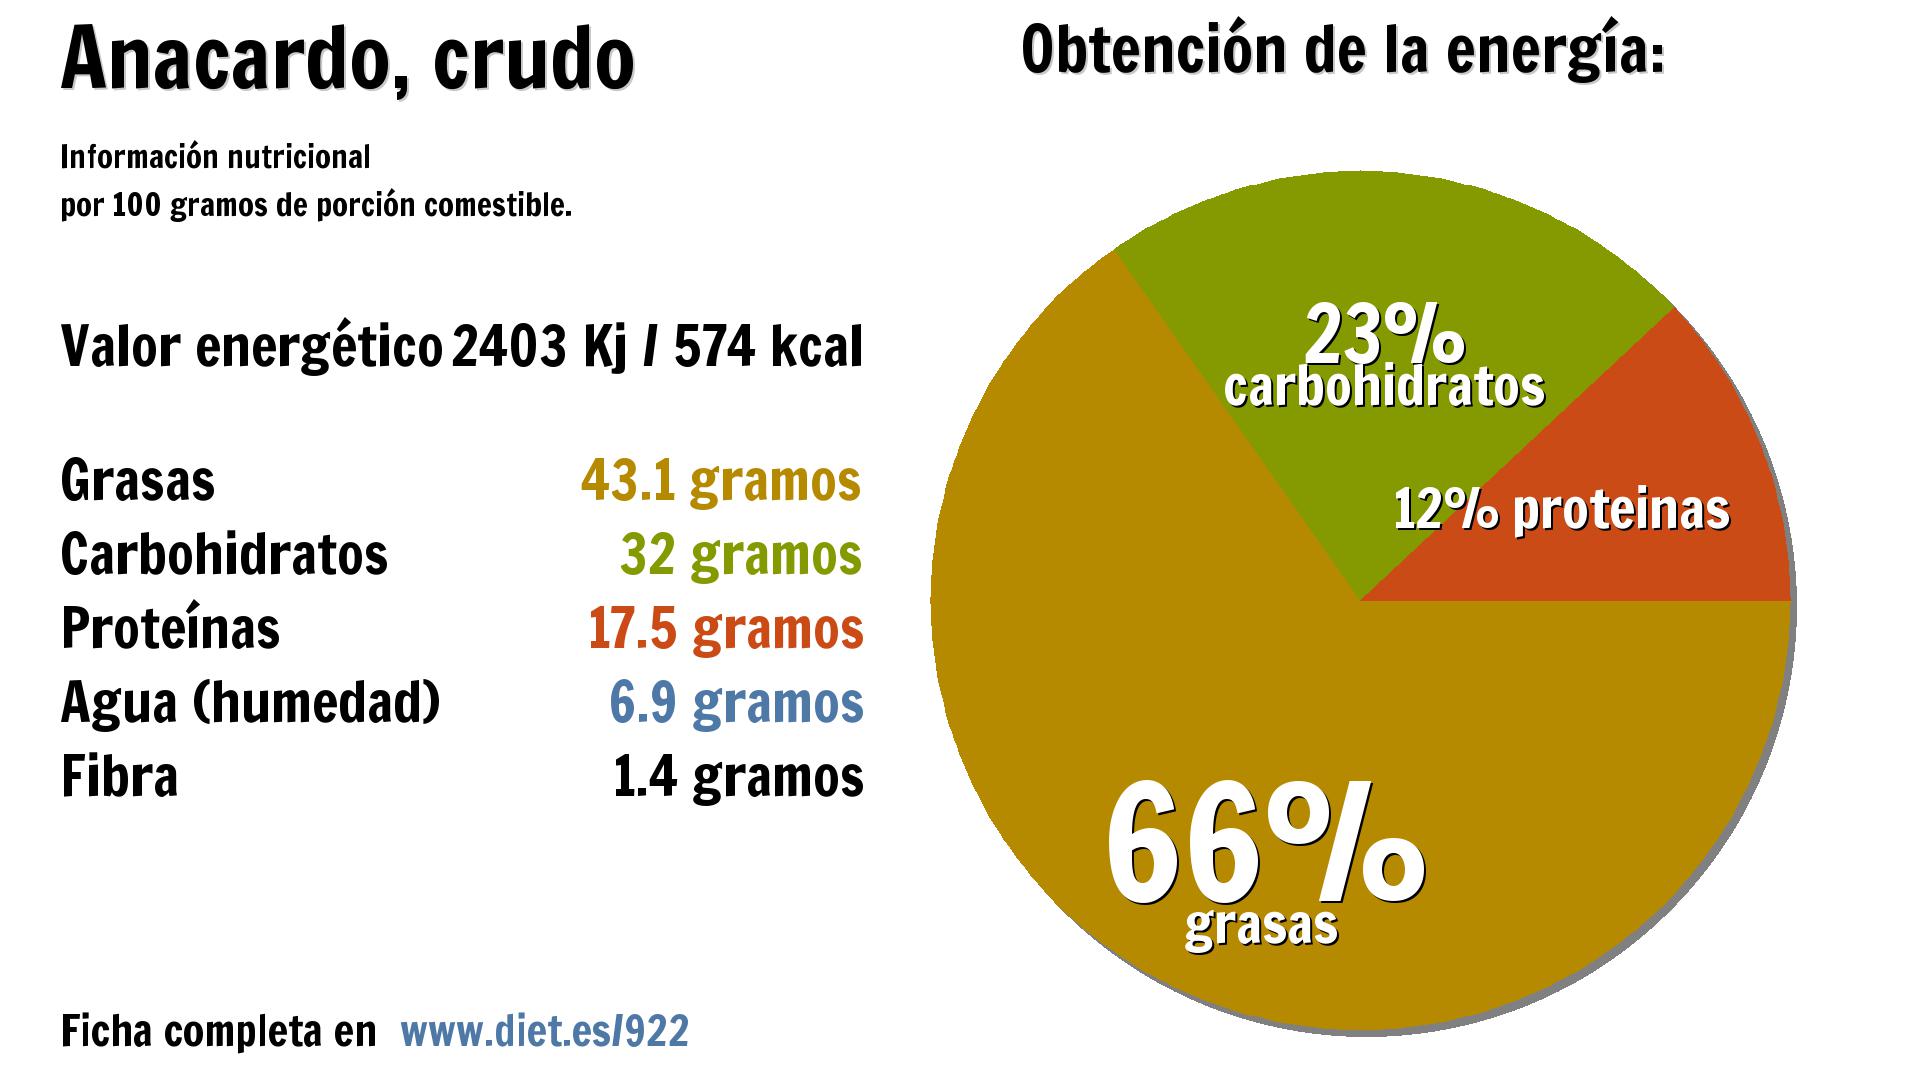 Anacardo, crudo: energía 2403 Kj, grasas 43 g., carbohidratos 32 g., proteínas 18 g., agua 7 g. y fibra 1 g.